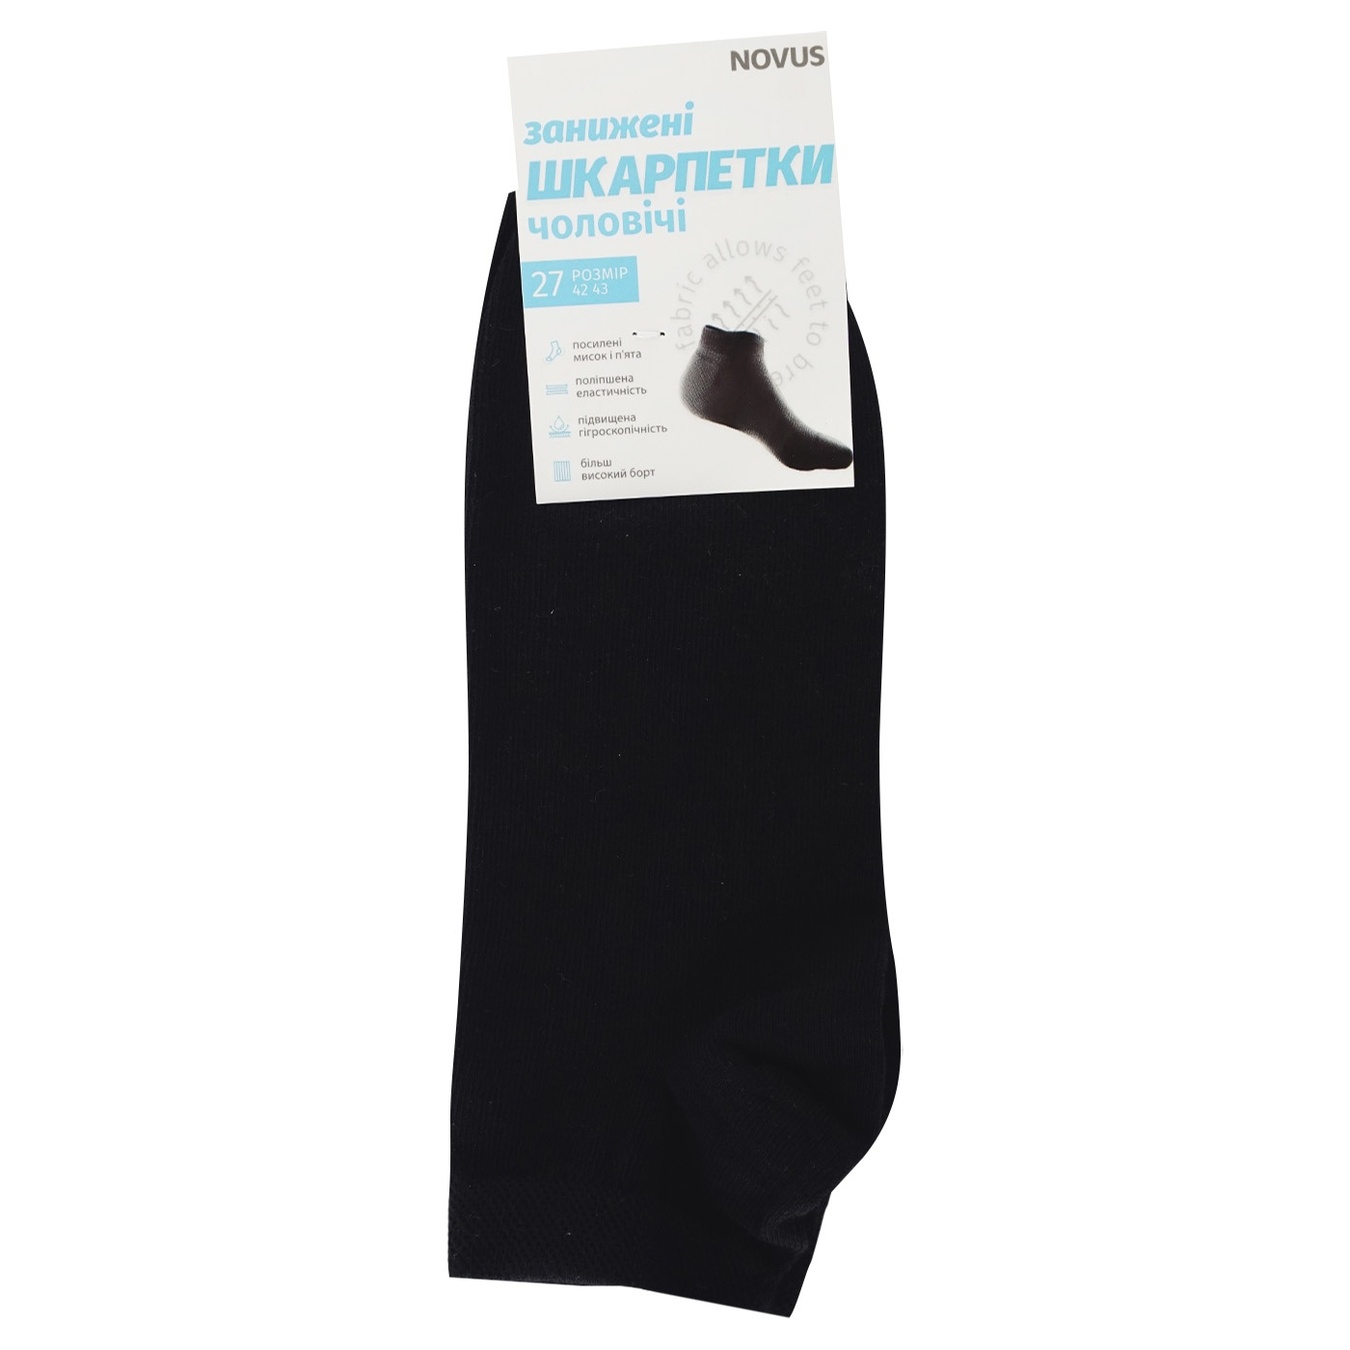 Men's socks NOVUS demi-season understated black size 27